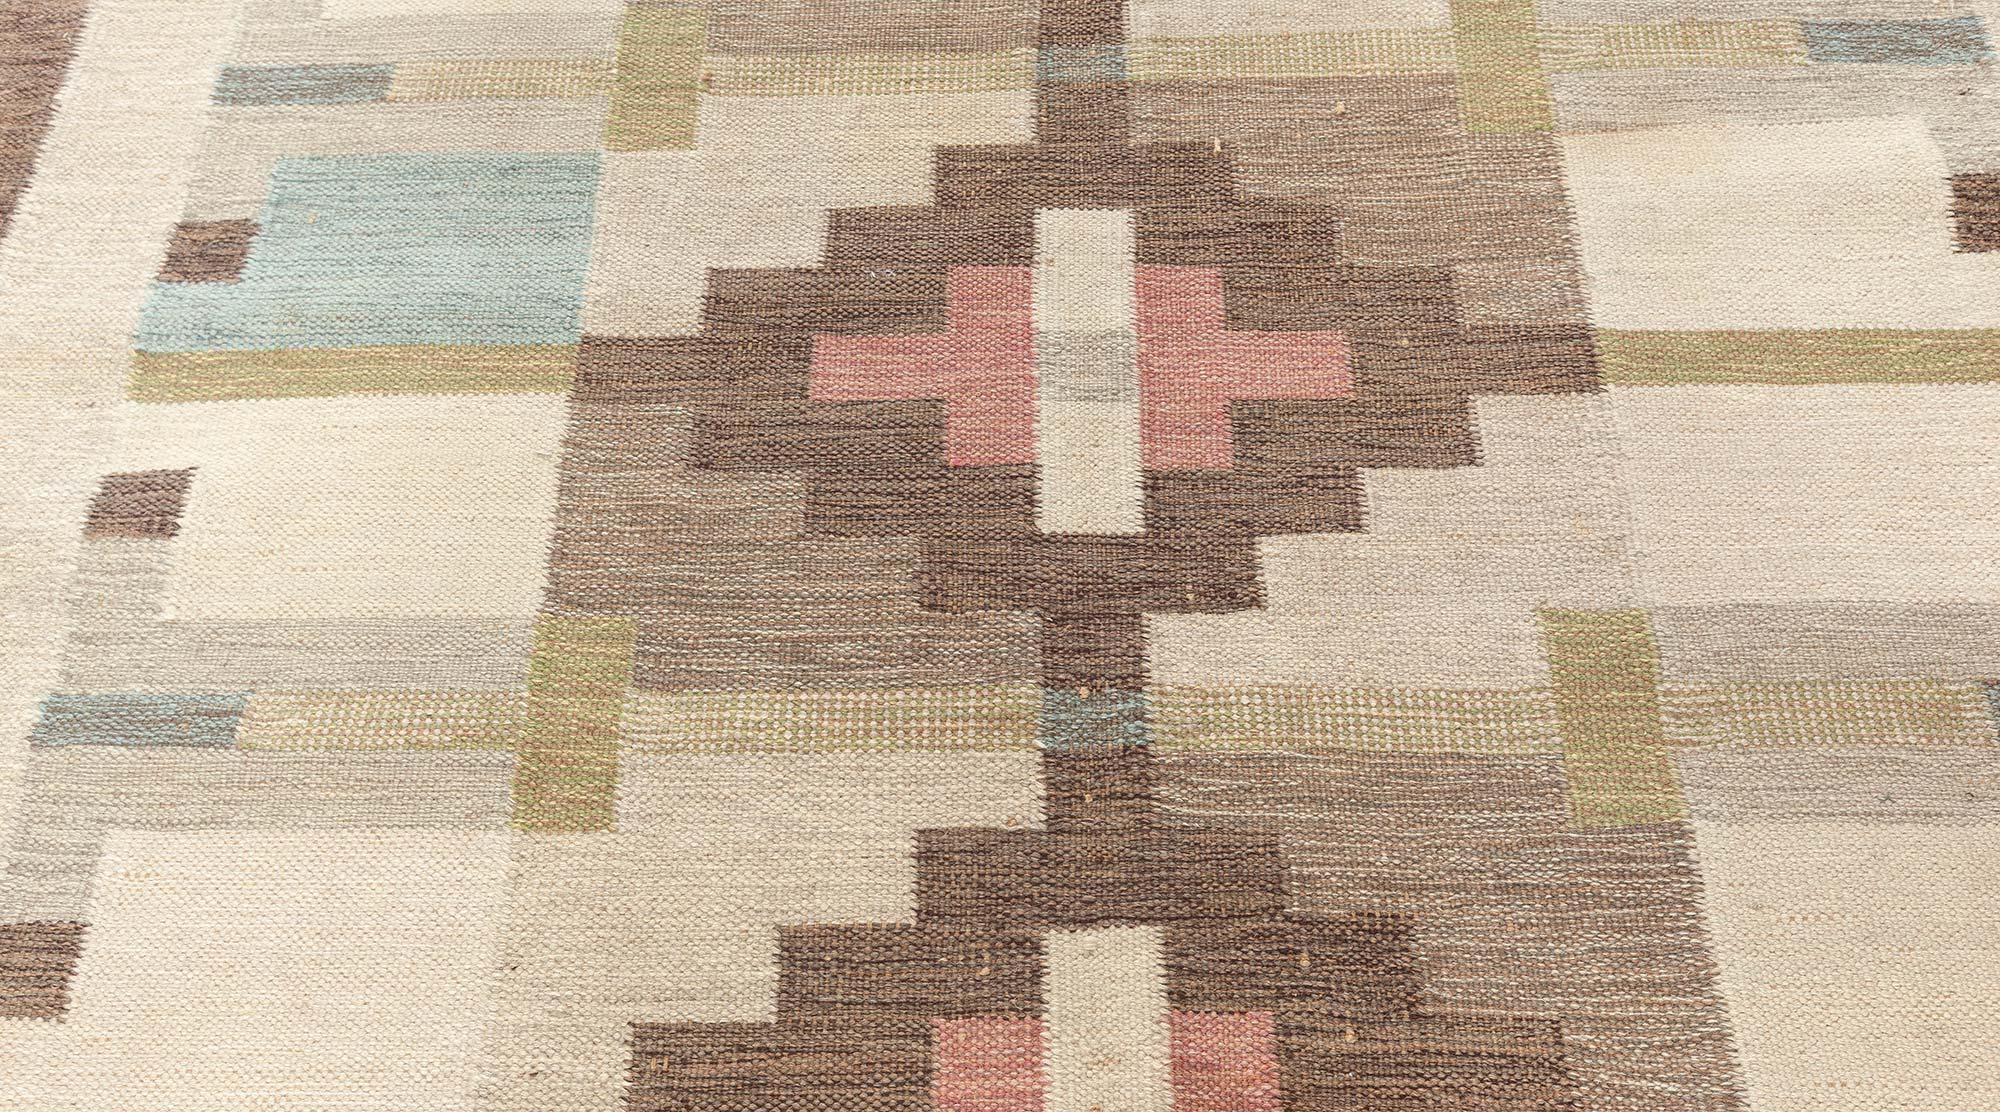 Vintage Swedish flat woven rug by Sverker Greuholm
Size: 5'8